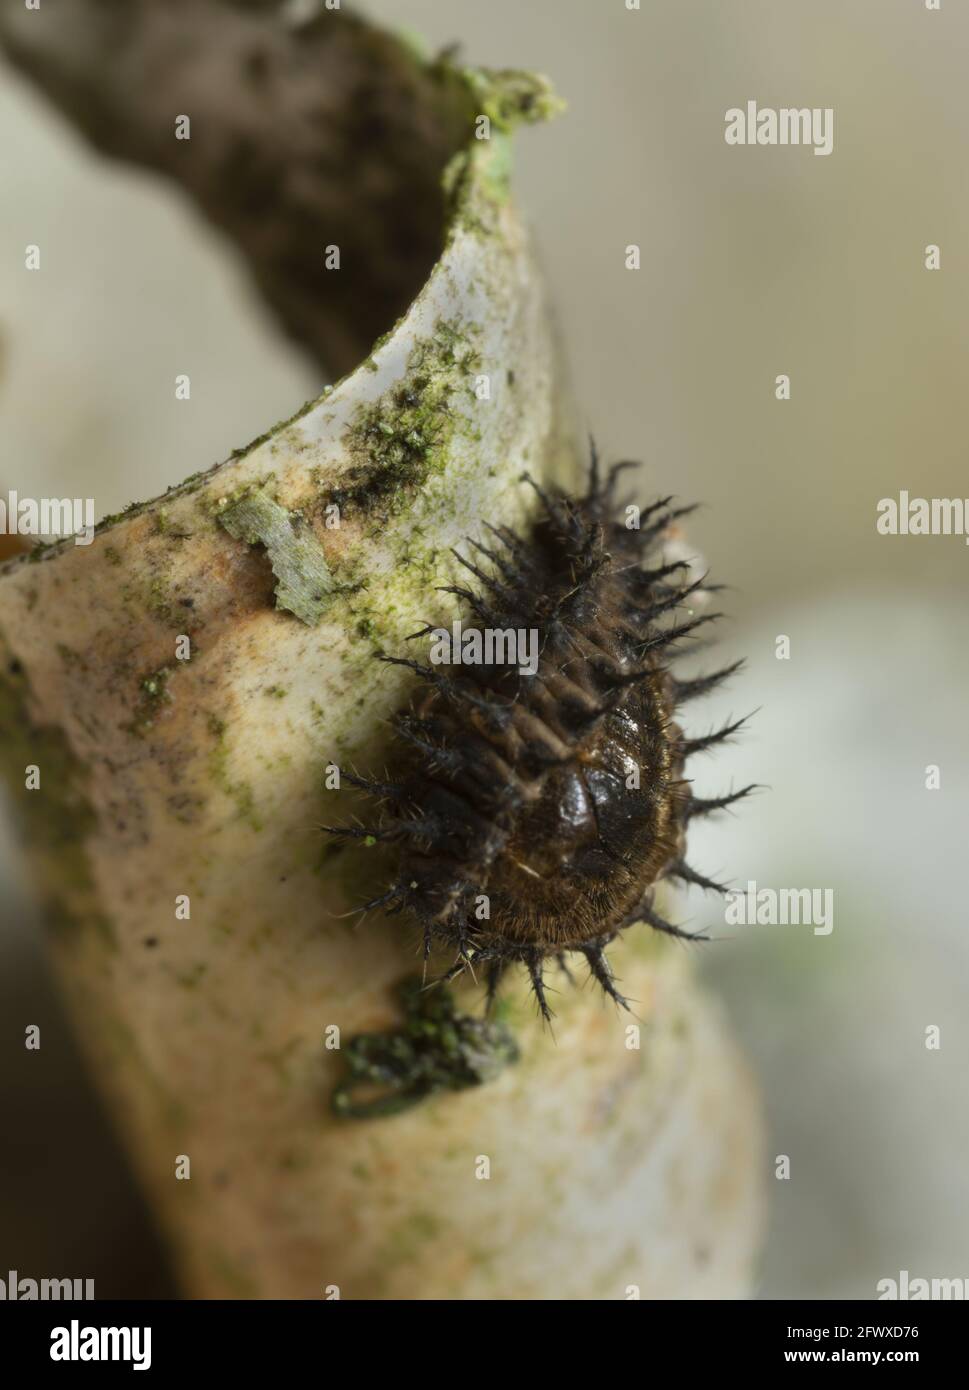 Mariquita de punto renal, Chilocorus renipustulatus pupa en corteza de abedul Foto de stock